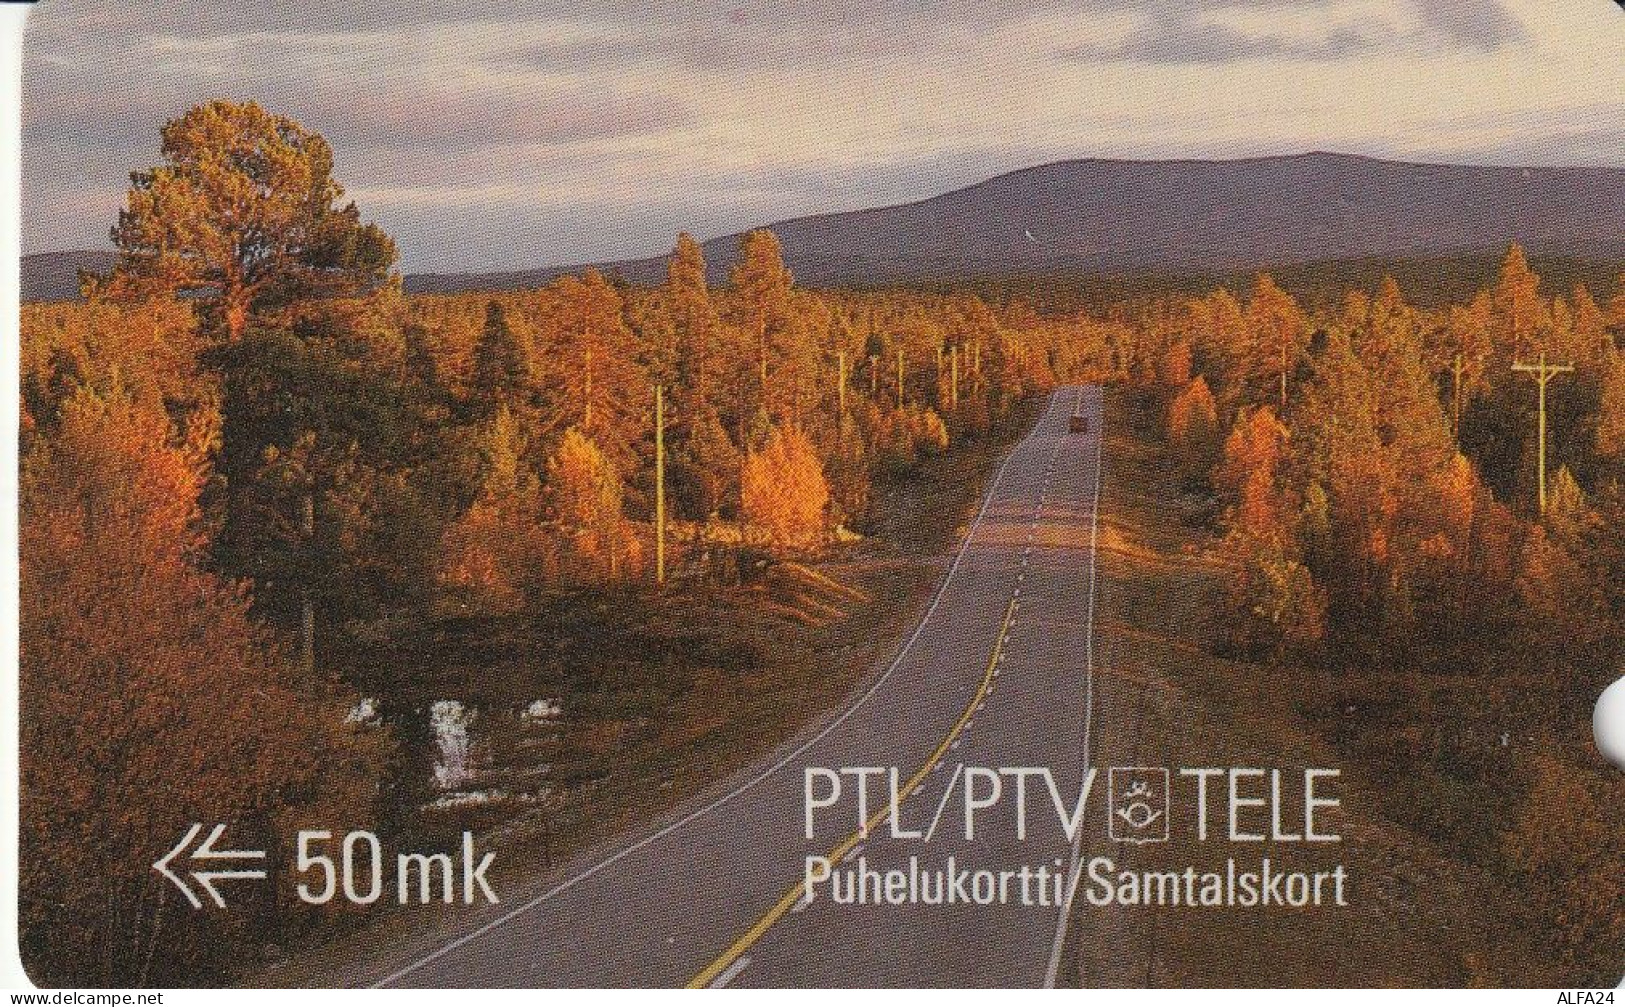 PHONE CARD FINLANDIA  (CZ1634 - Finland